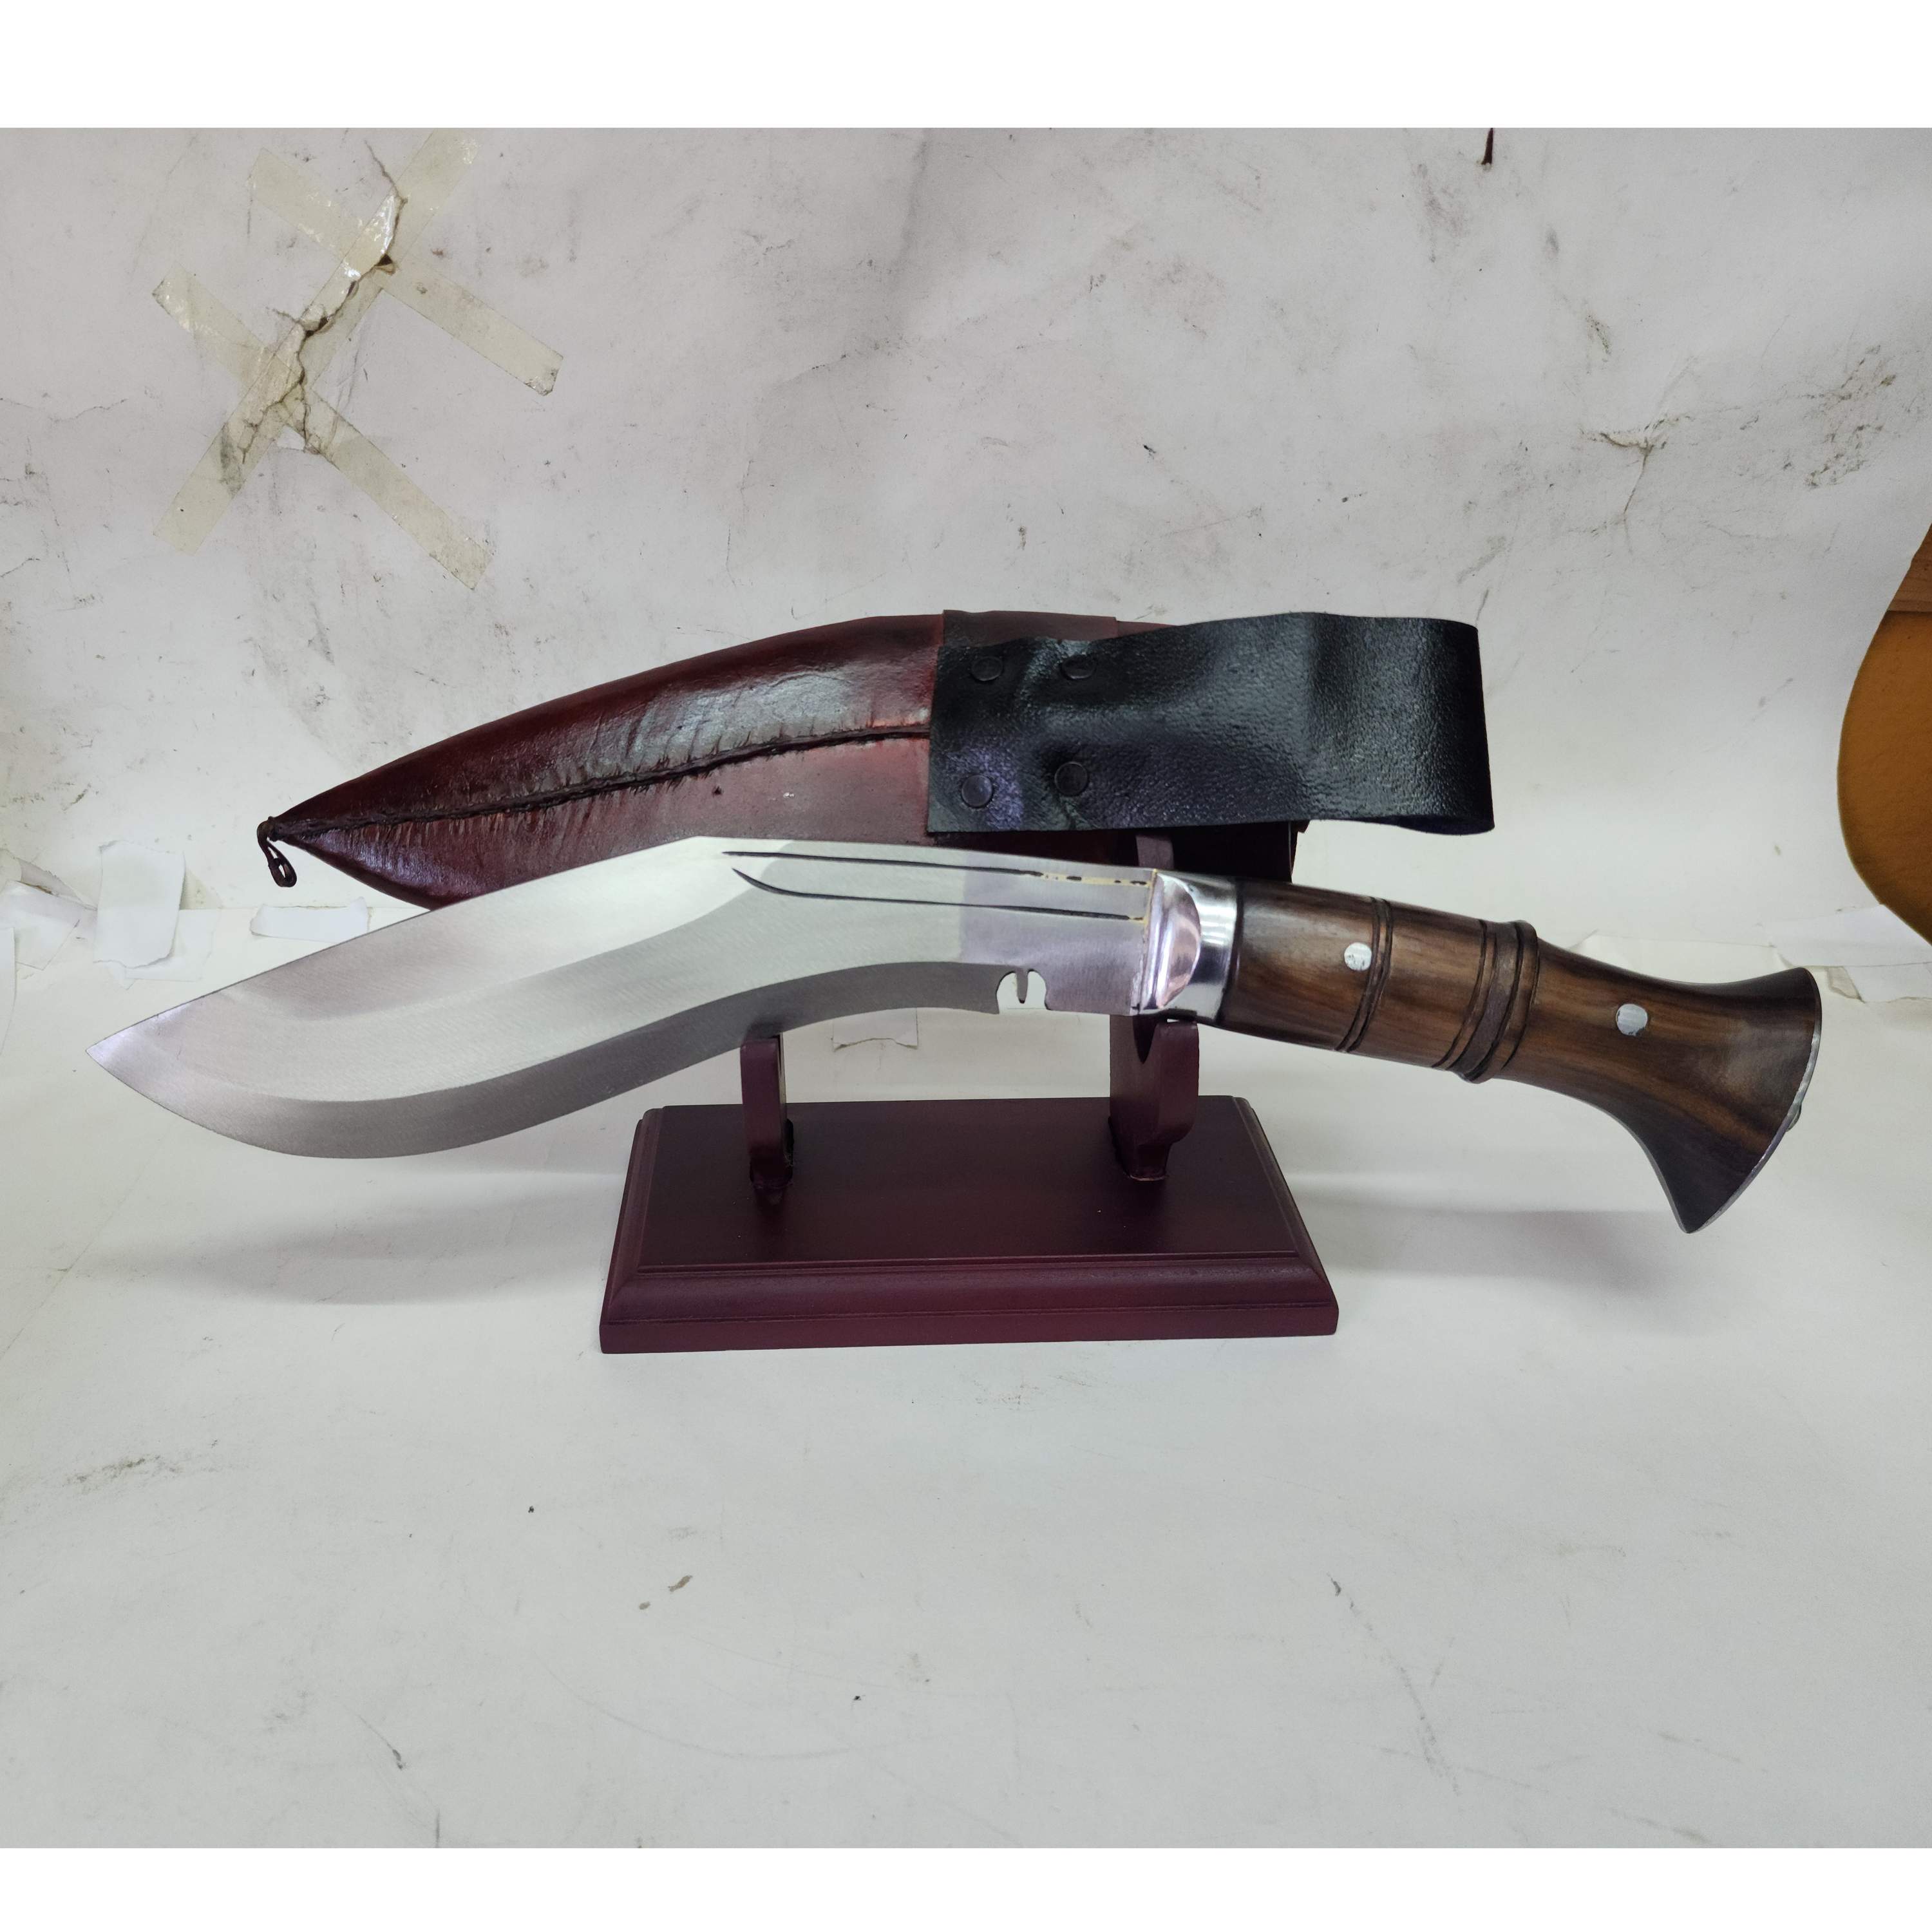 8 Inch, panawala Khukuri, Gurkha Knife - With Leather Cover And Stand, Nepali Machete